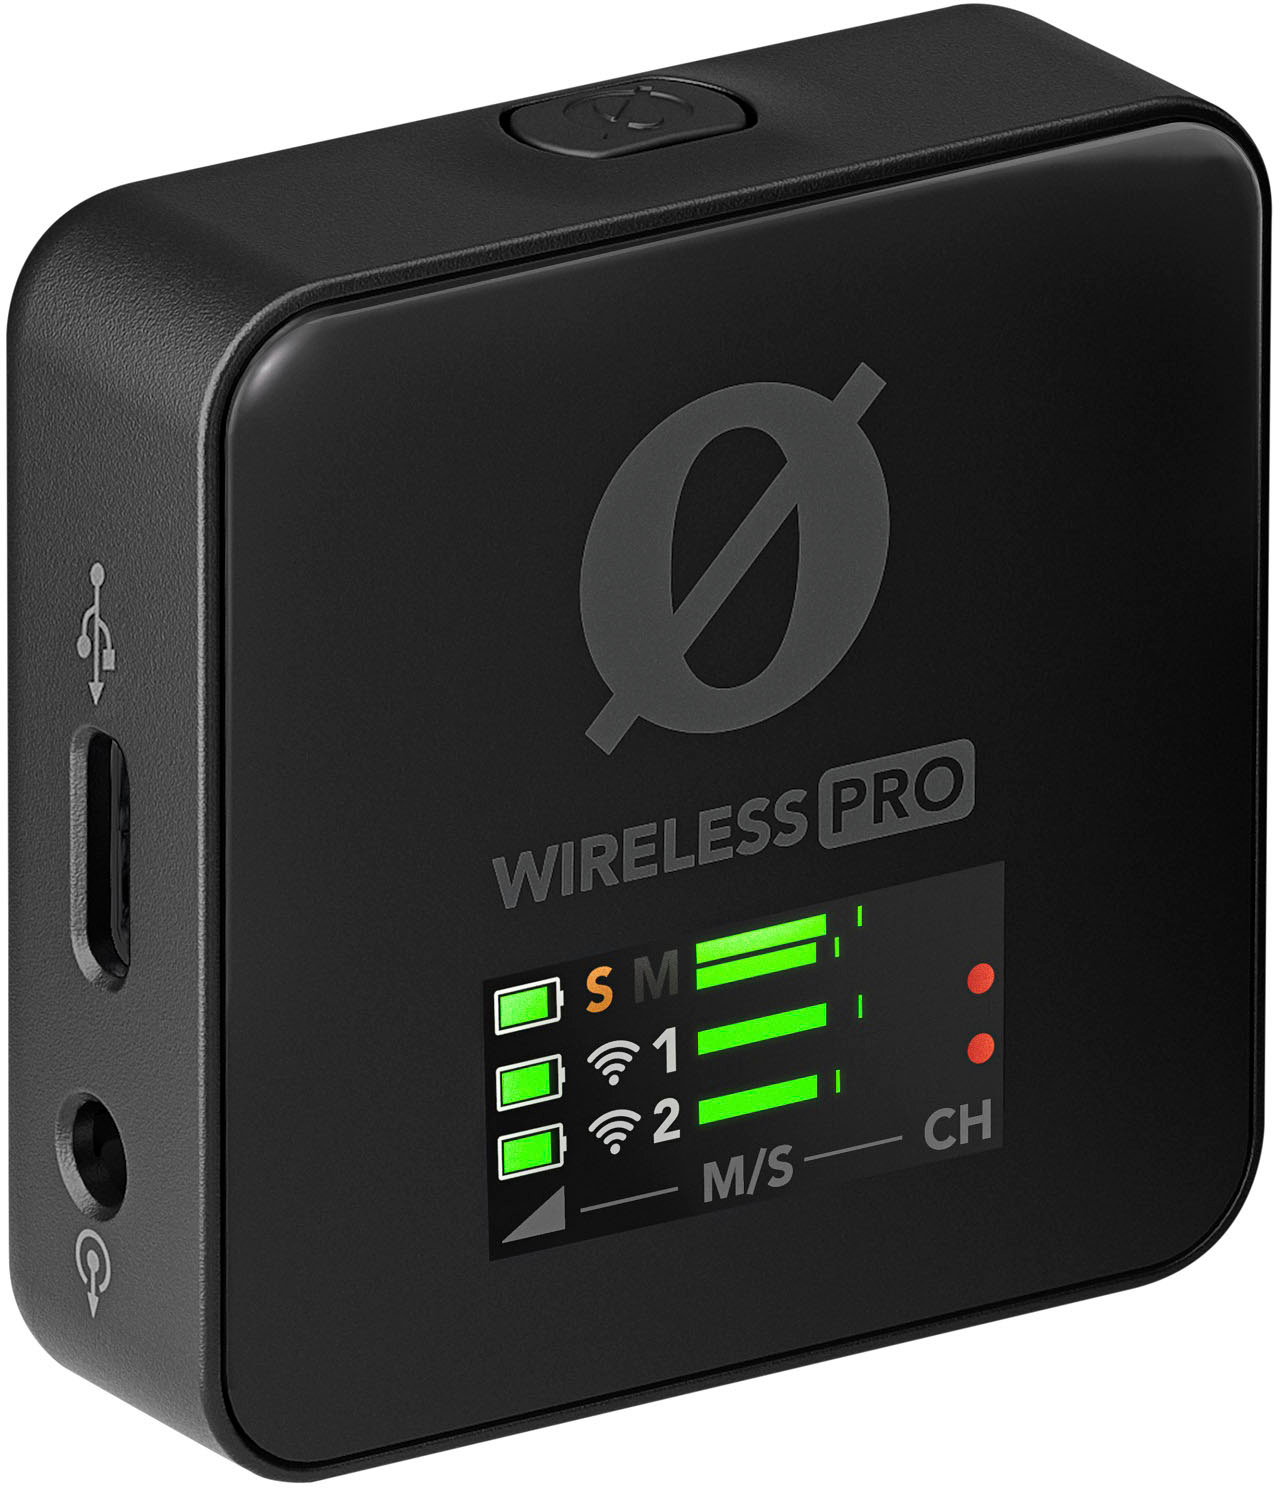 RØDE WIRELESS GO II Dual Channel Wireless Microphone System WIGOII - Best  Buy